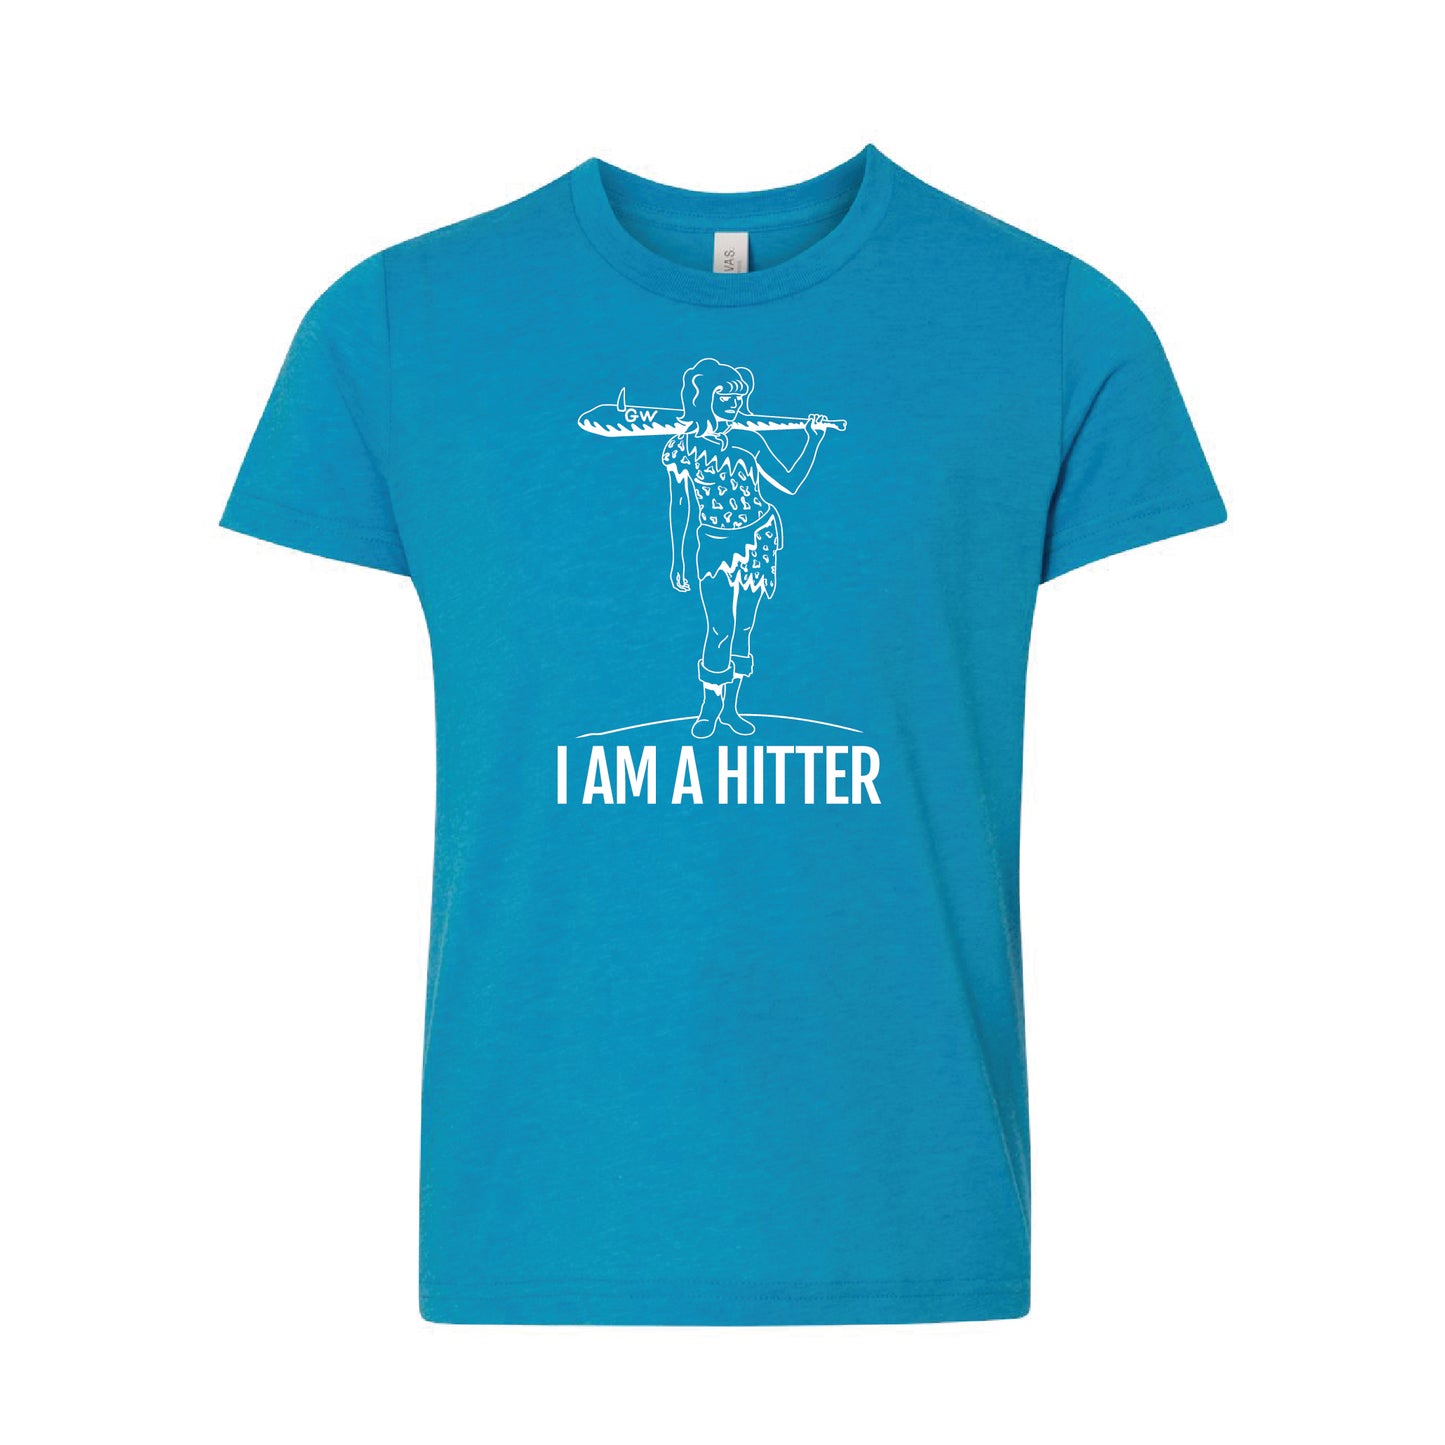 I'm a Hitter Youth Girls T-Shirt